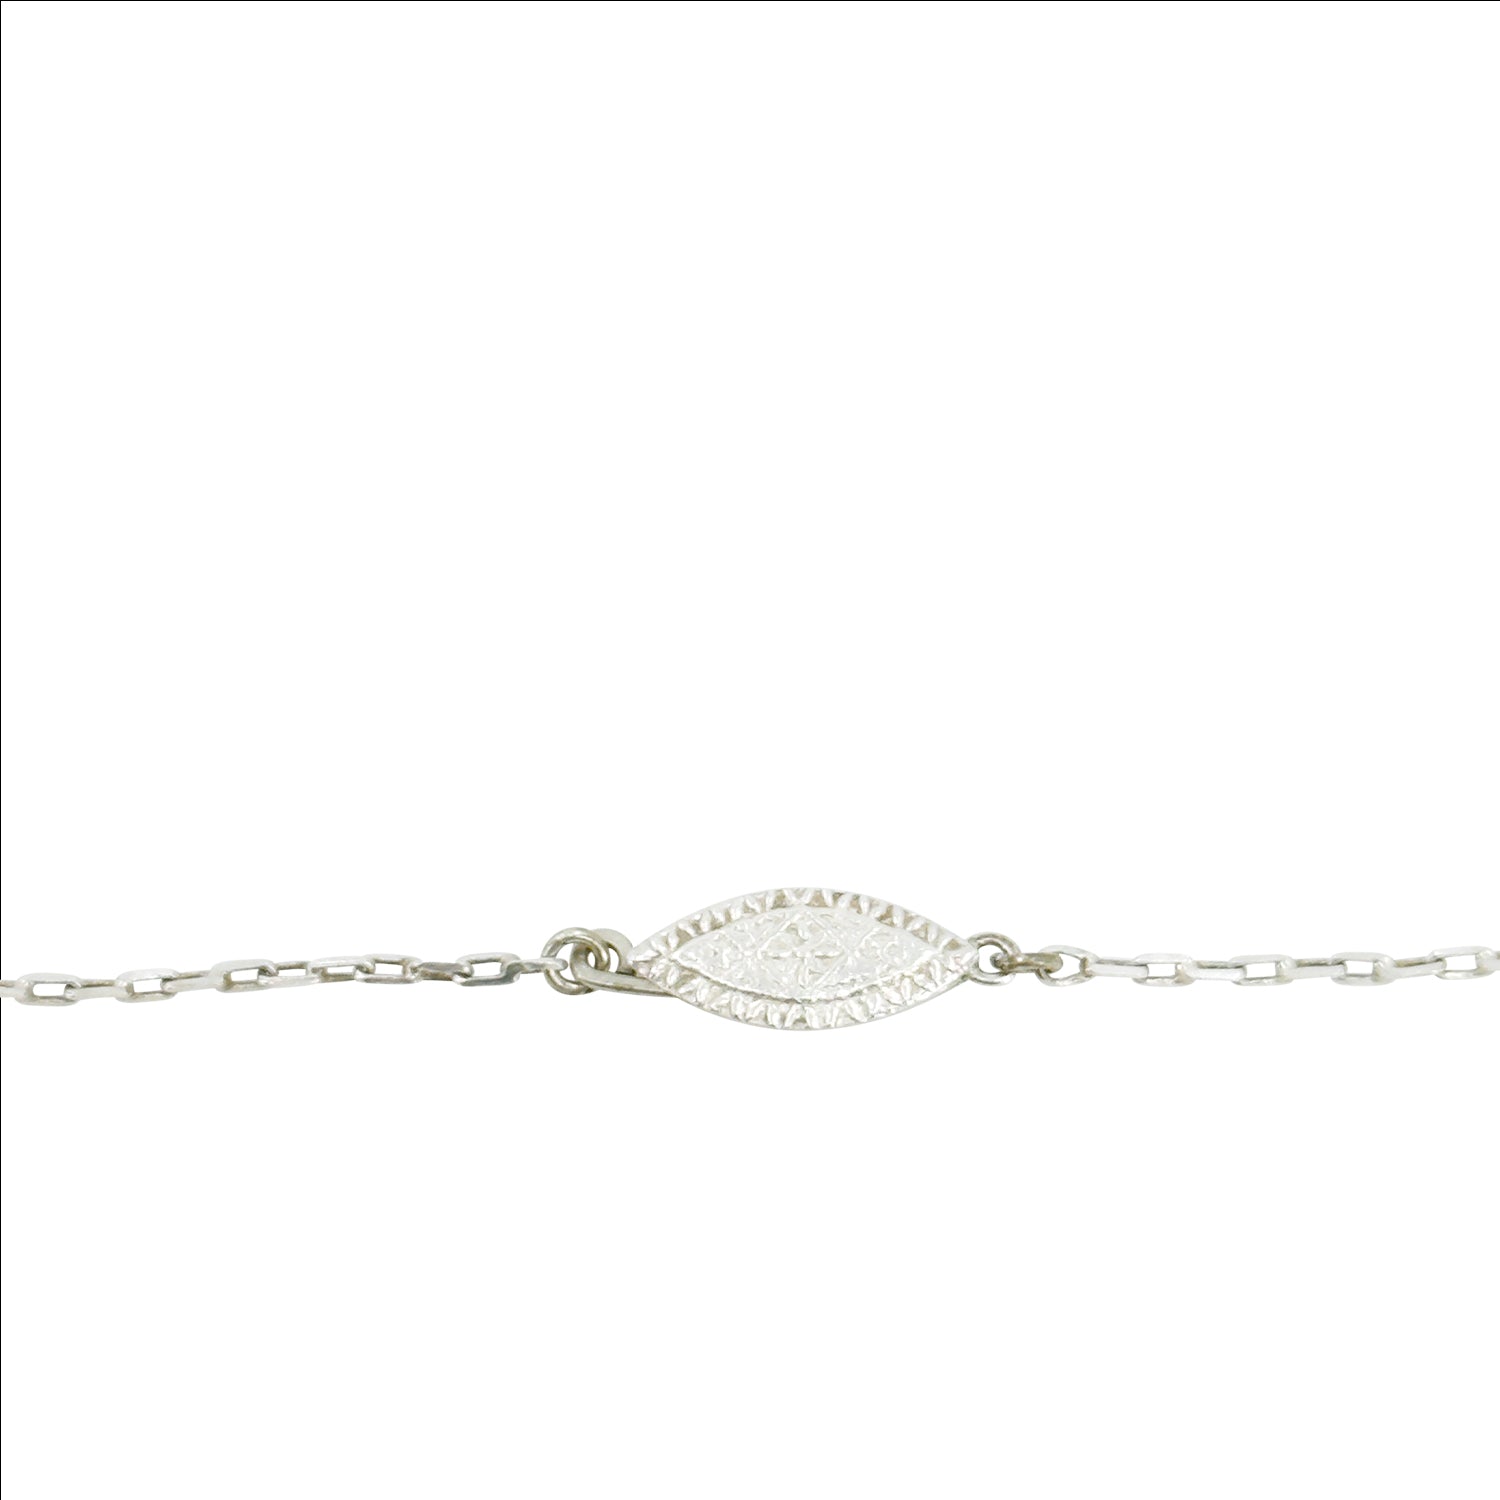 Nephrite Jade Art Deco Engraved Japanese Cultured Akoya Pearl Modernist Pendant Necklace Bracelet Set- Sterling Silver 16 Inch